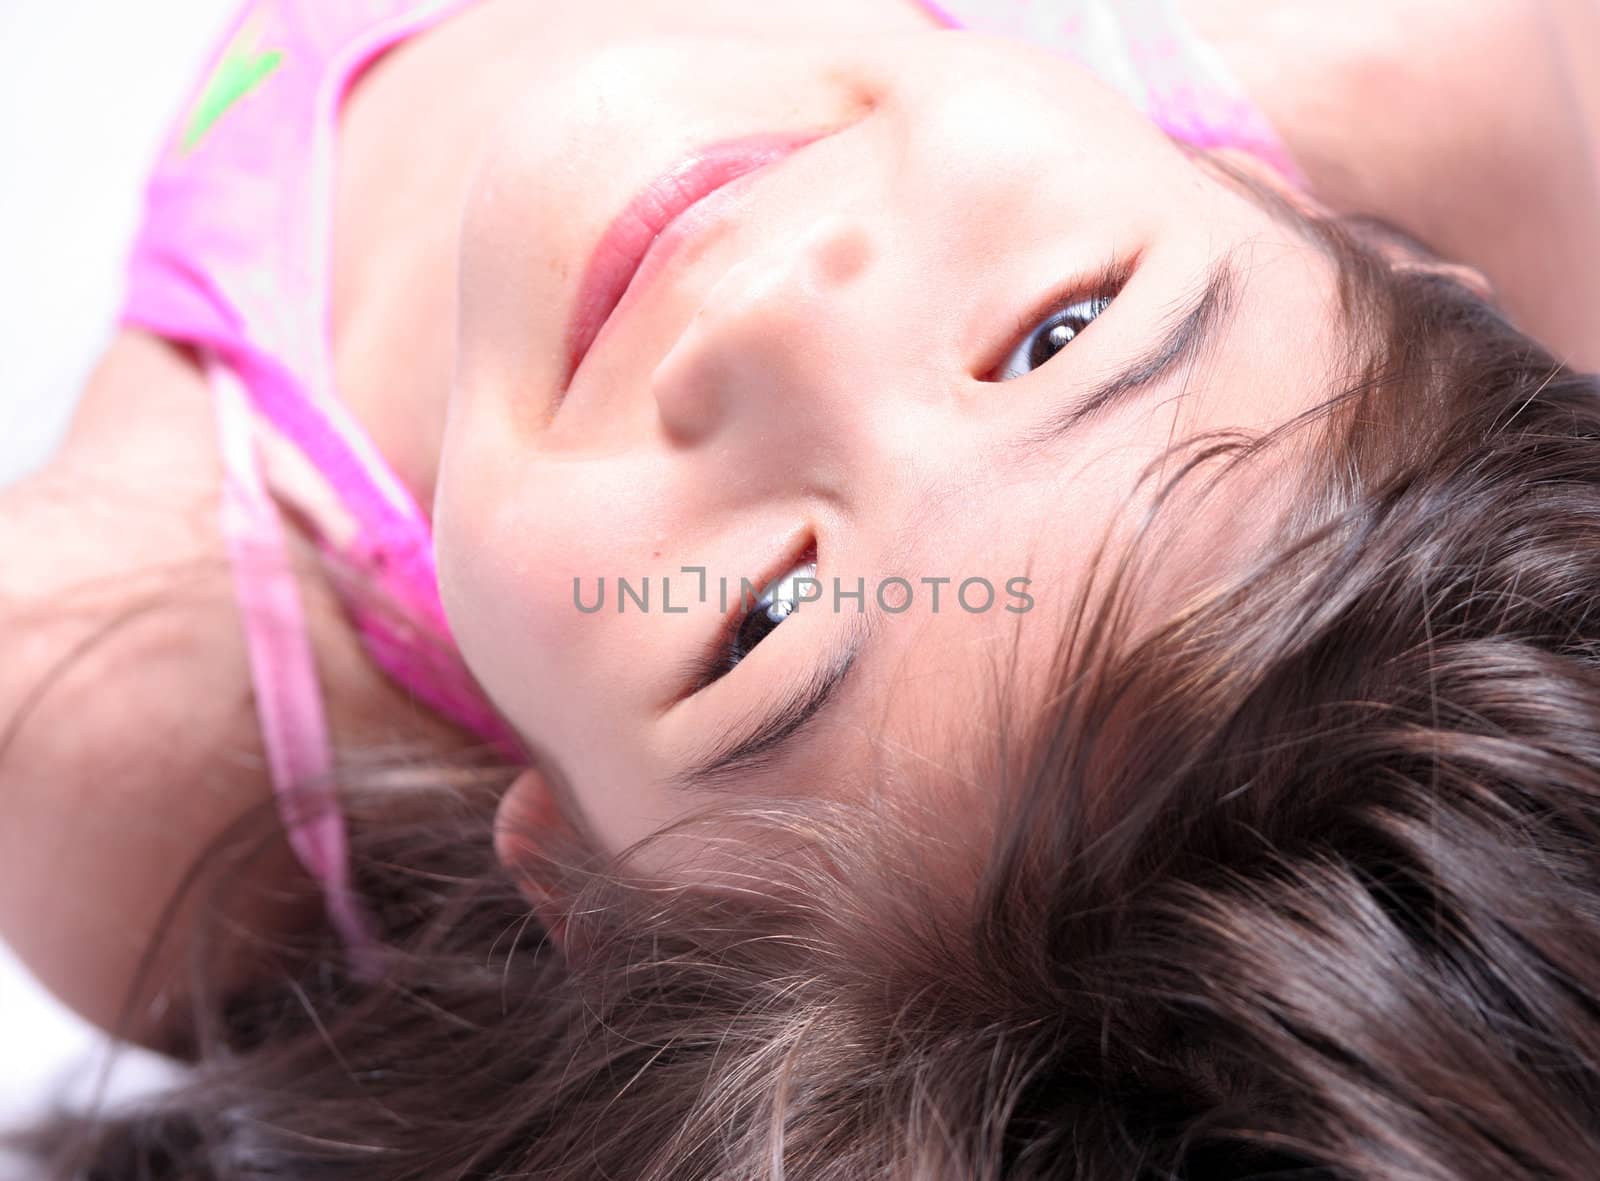 Girl looking upside down at camera by jarenwicklund